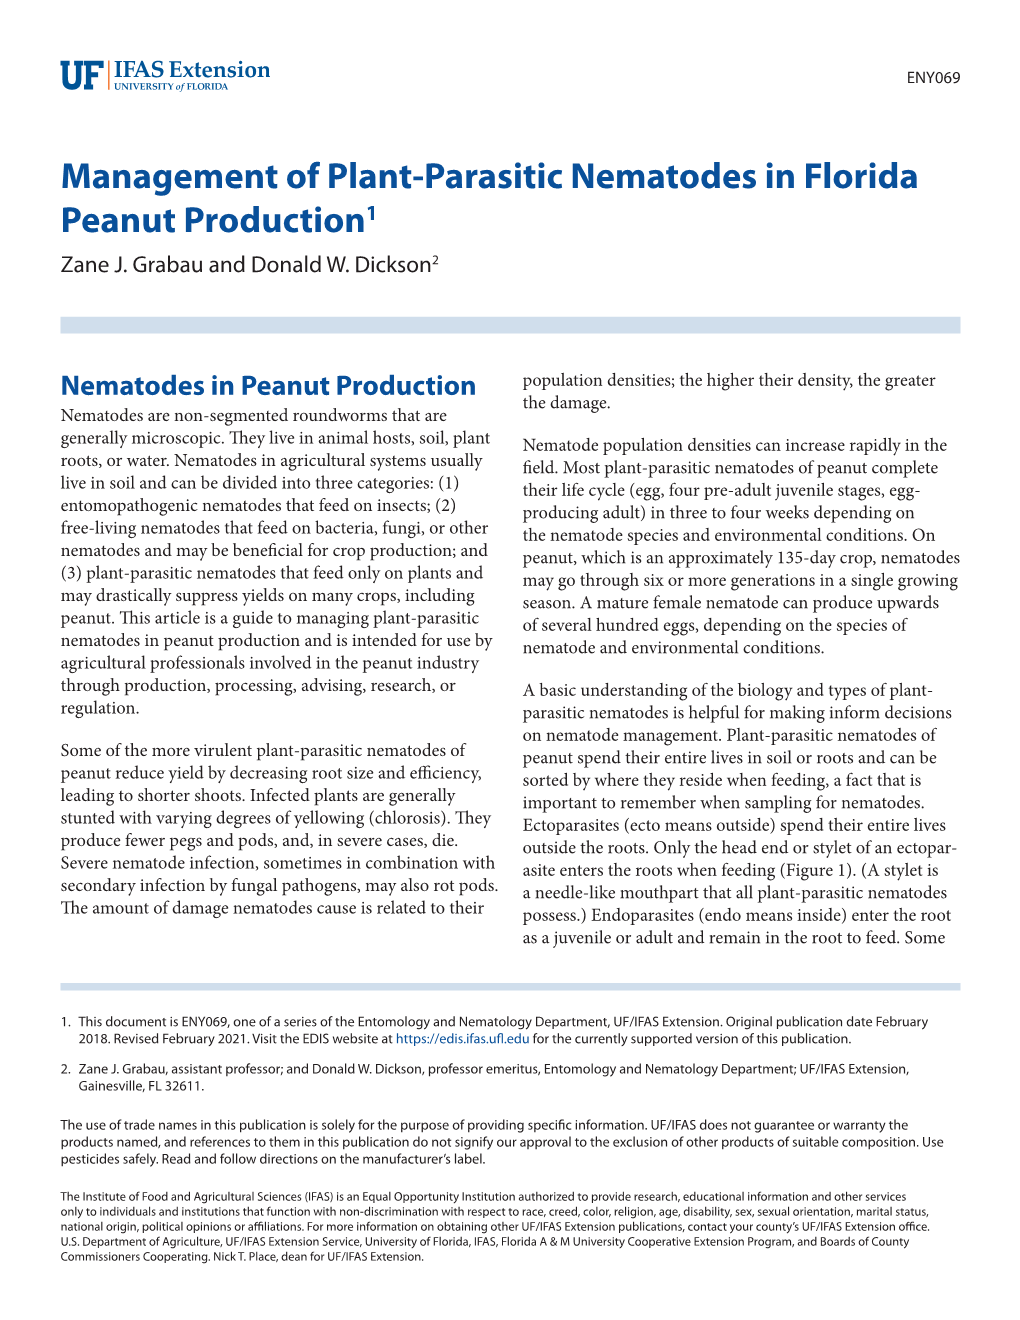 Management of Plant-Parasitic Nematodes in Florida Peanut Production1 Zane J